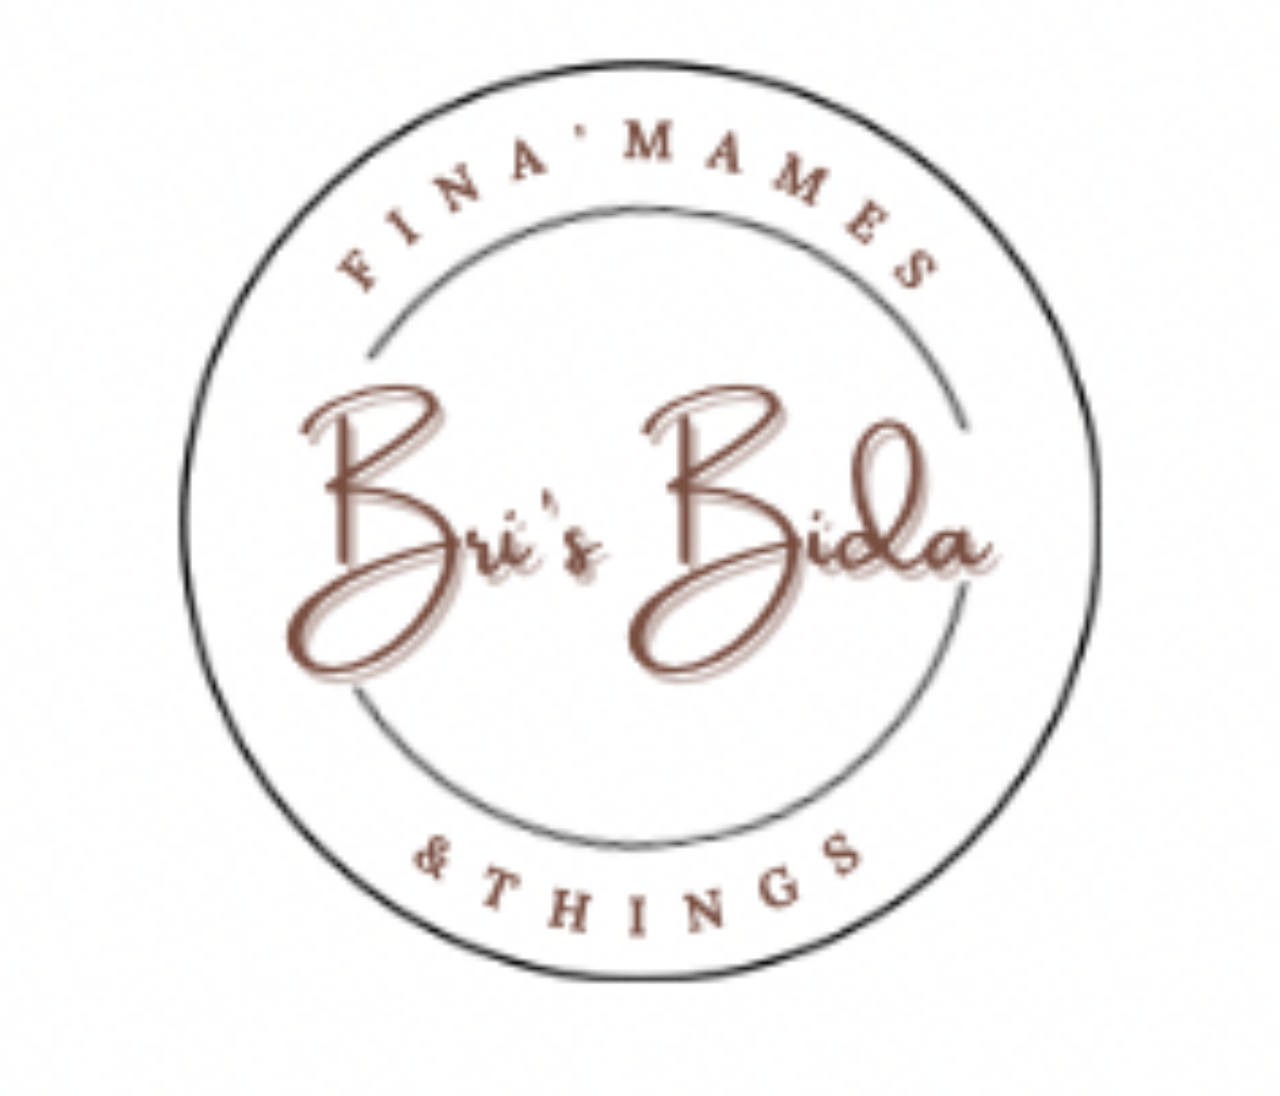 Bri's Bida's web page